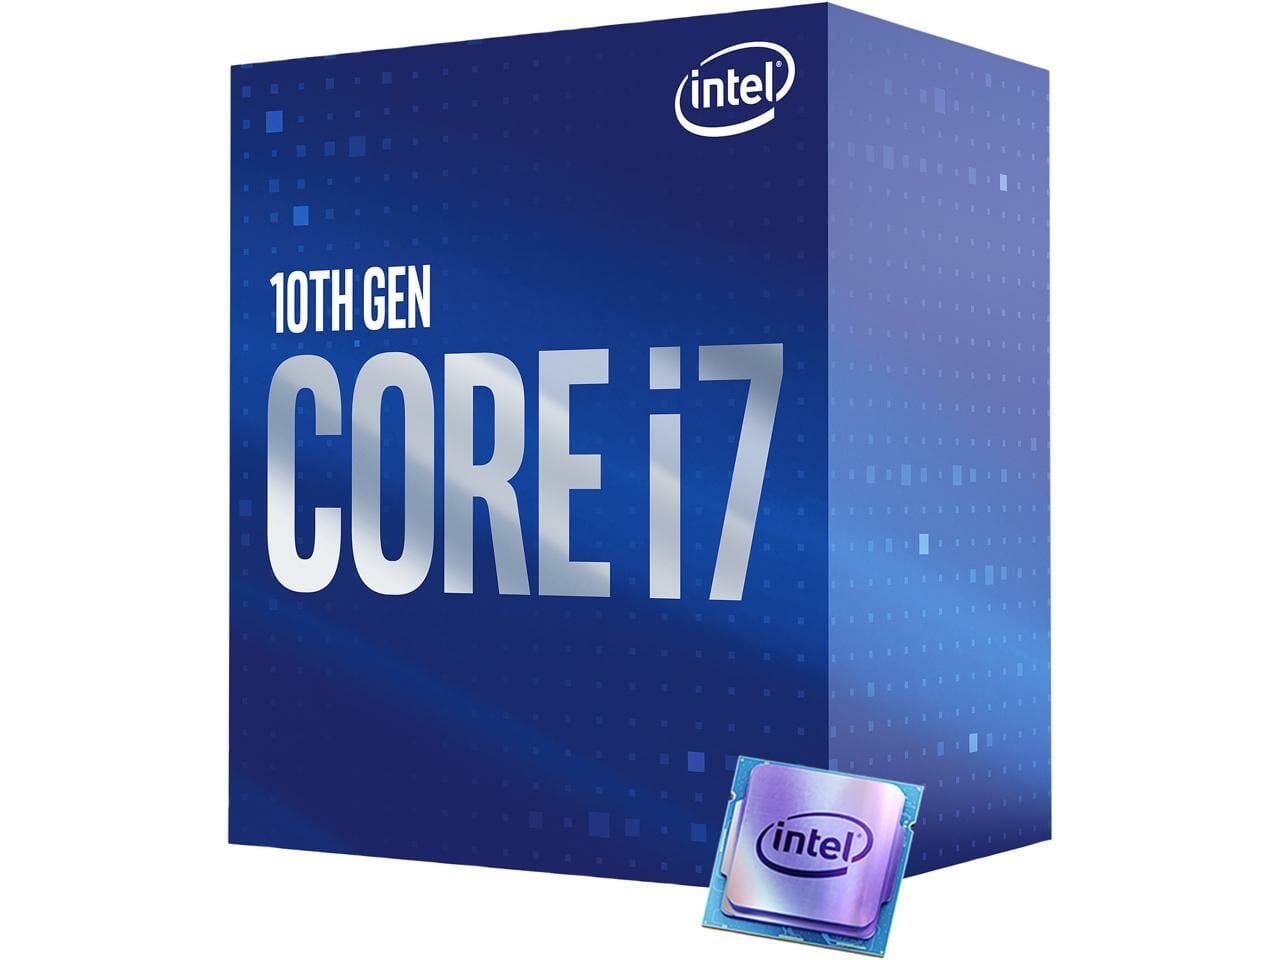 Intel 10th Gen Core i7 10700 Processor